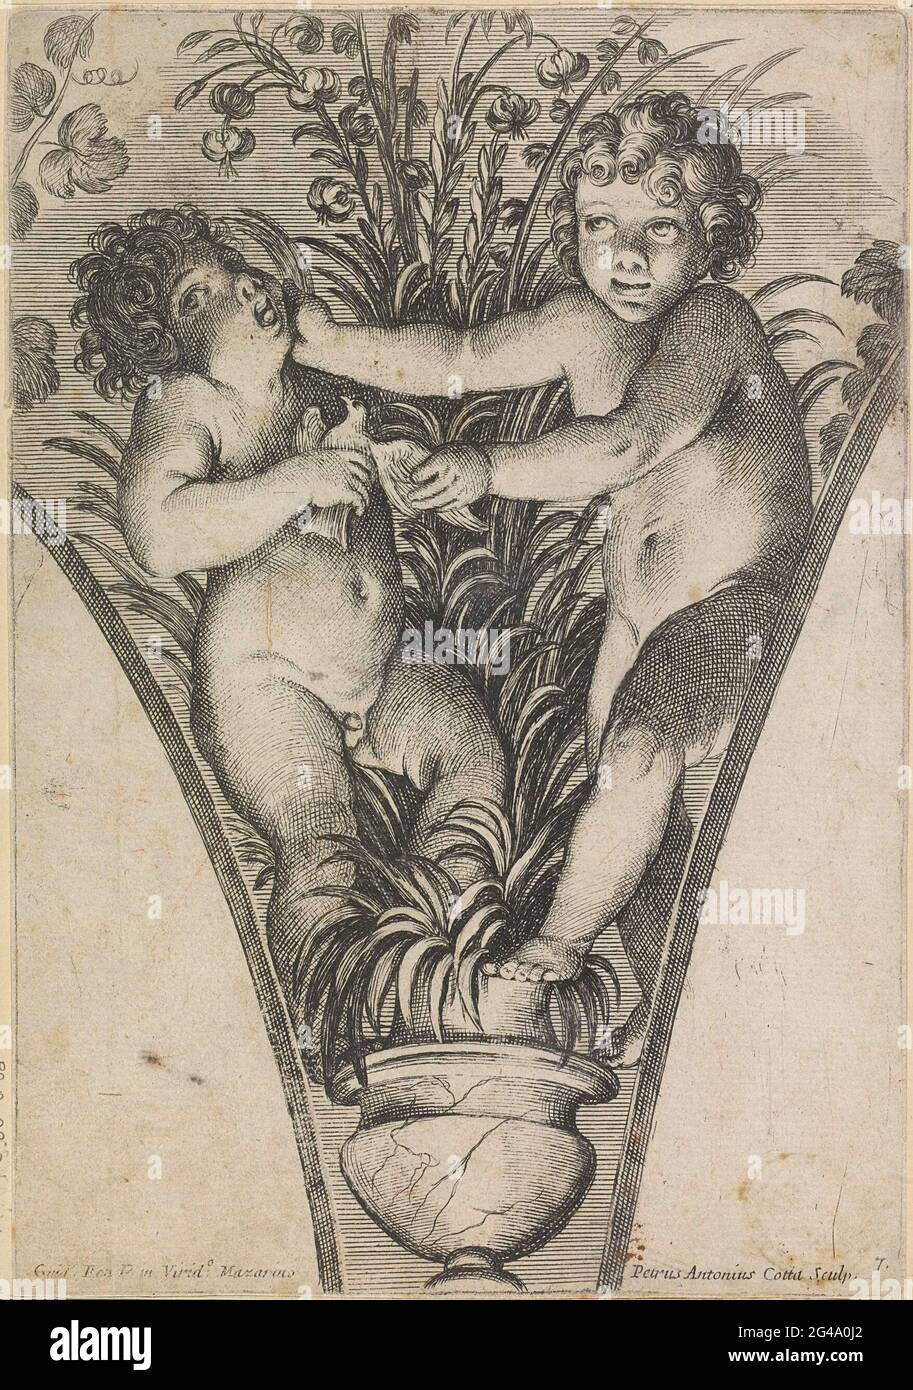 Two putti, fighting to a bird, at a plant in a pot; Guido Reni's frescoes in the Loggia of the Palazzo Rospigliosi Pallavicini. . Stock Photo